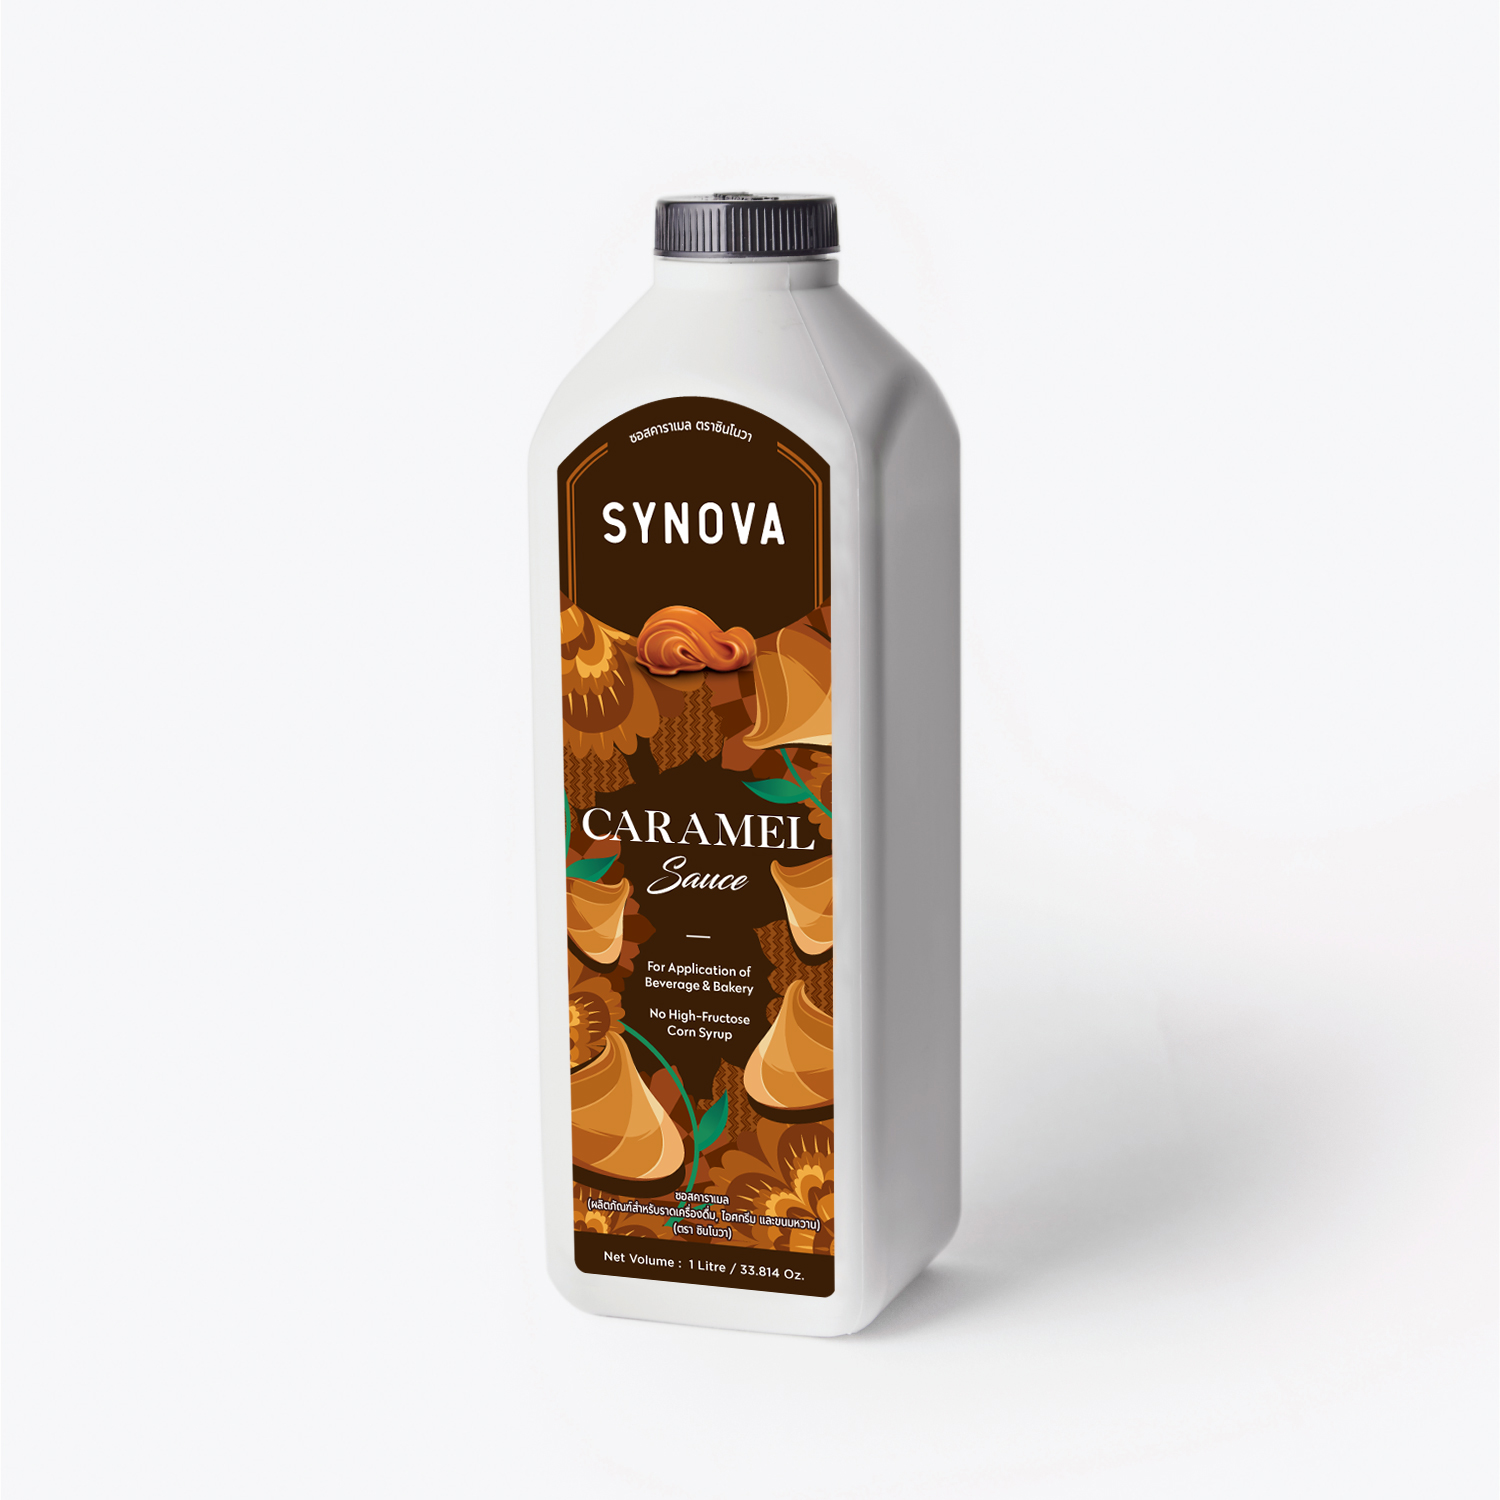 SYNOVA Caramel Sauce (Box)